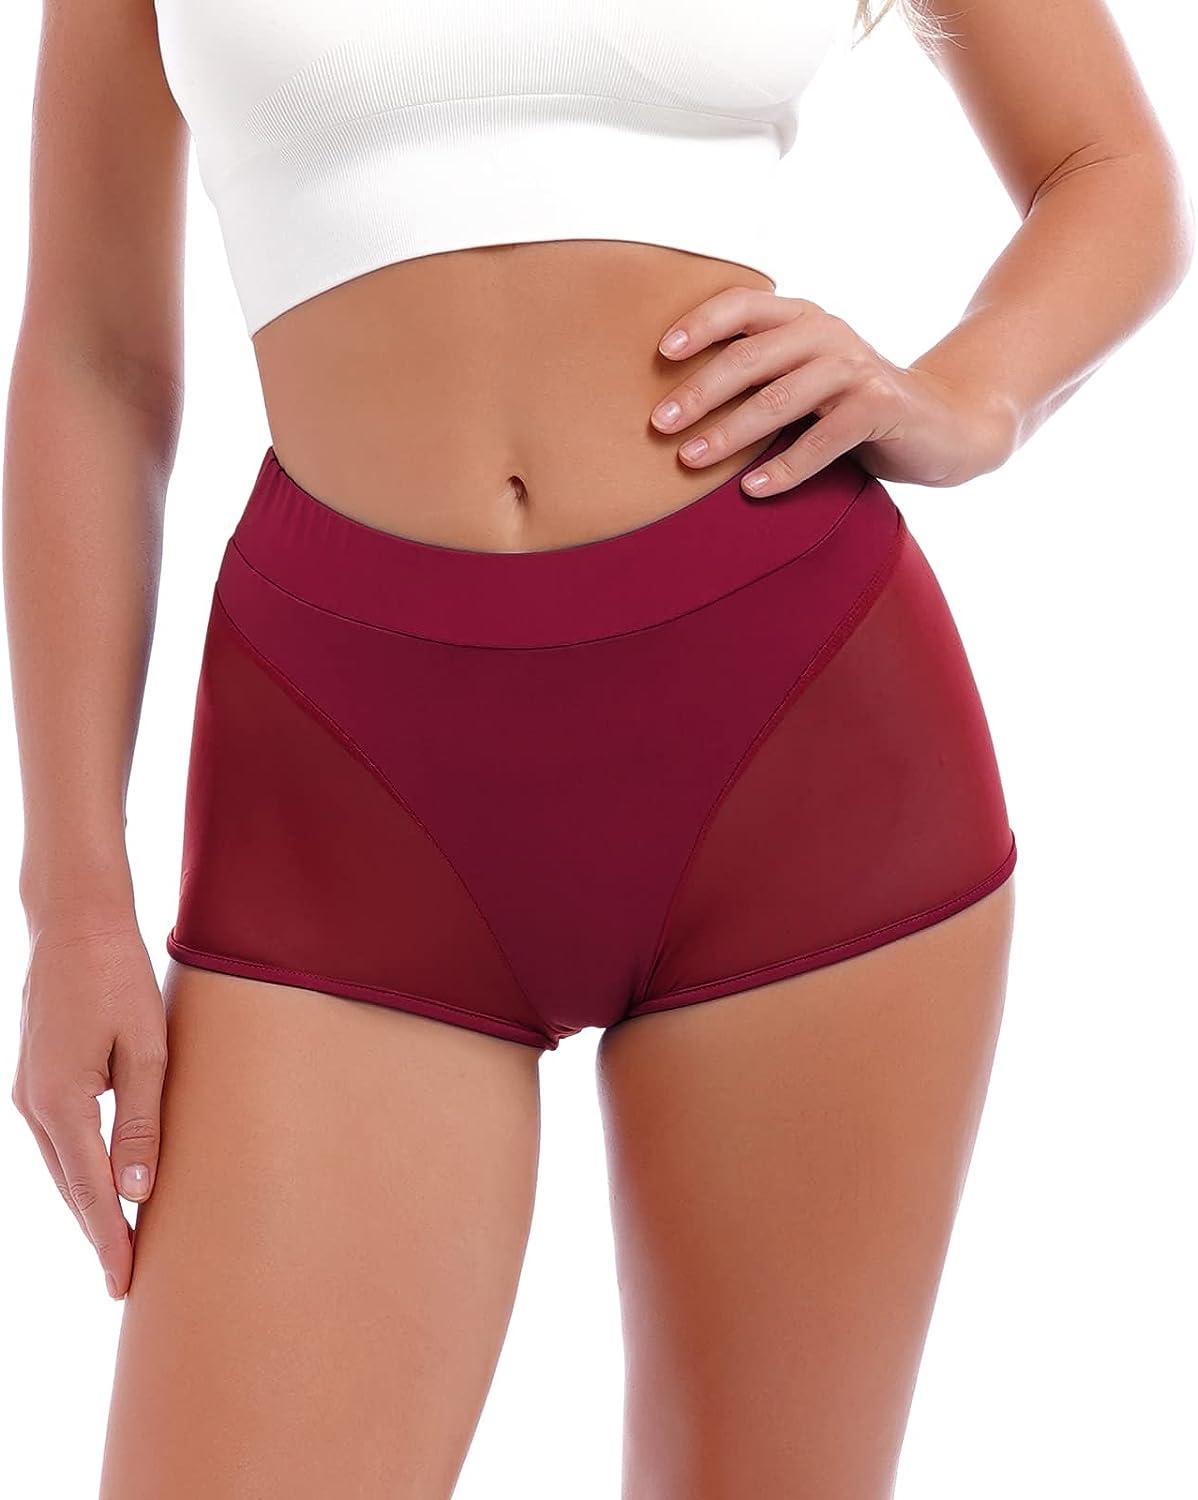 Women High Waist Mesh Tulle Spliced Activewear Yoga Shorts Dance Bottoms  Rave Booty Shorts Mini Hot Pants Medium Wine Red